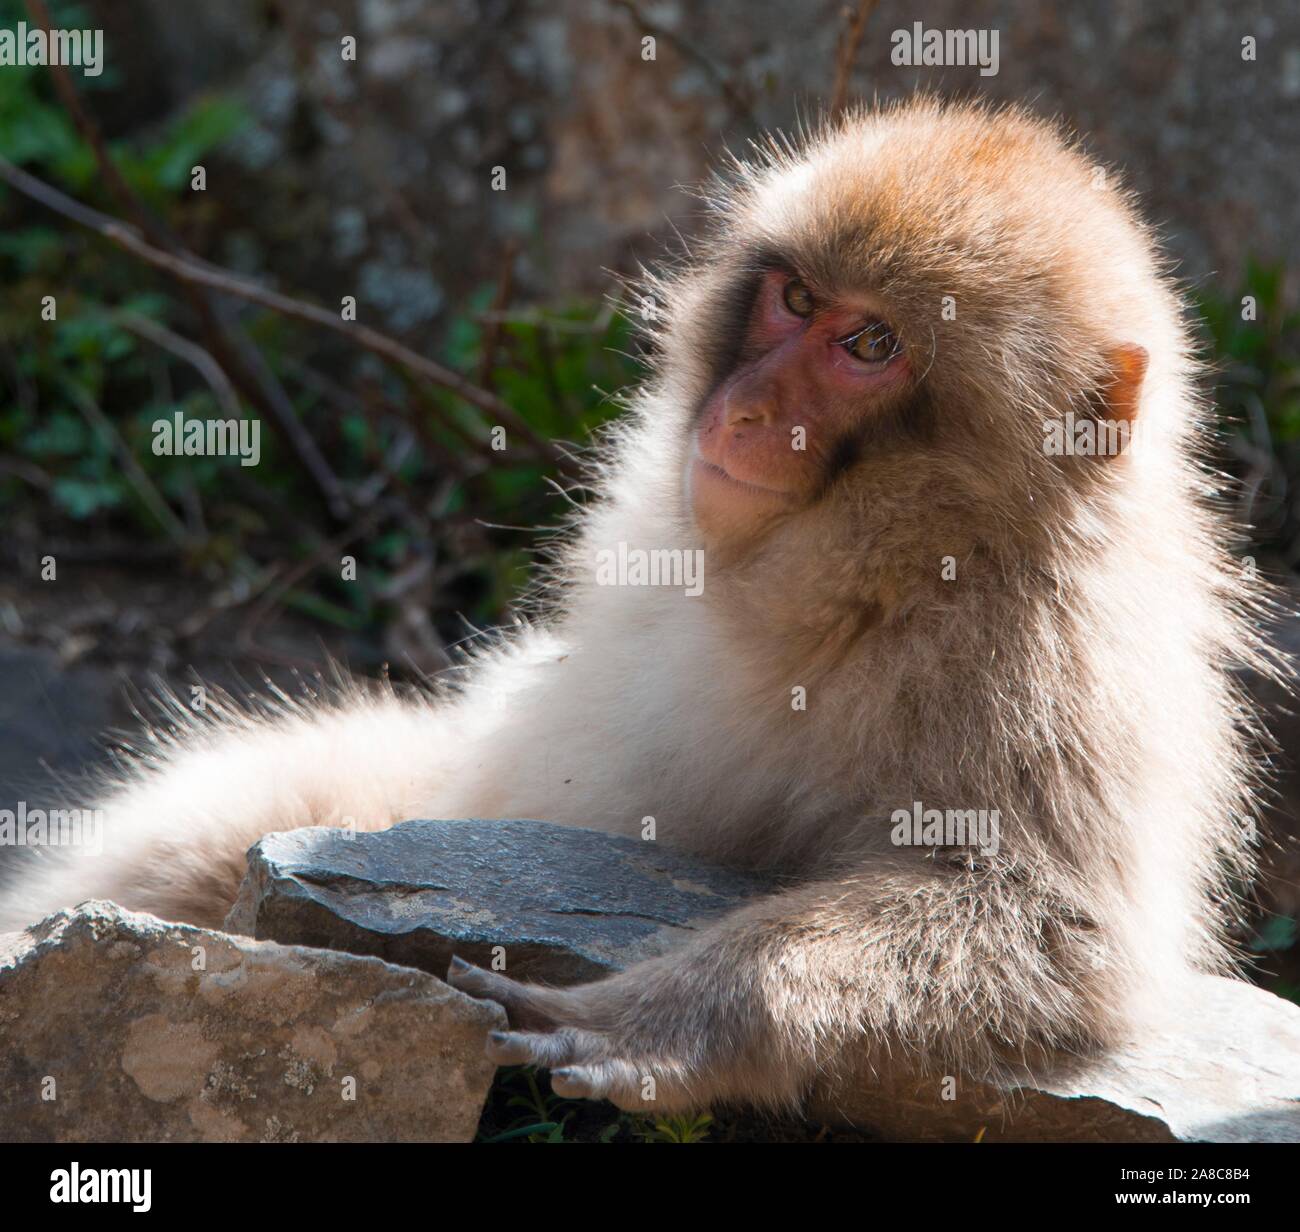 Macaque giapponese (Macaca fuscata) guarda questioningly nella fotocamera, free living, Yamanouchi, Prefettura di Nagano, isola di Honshu, Giappone Foto Stock